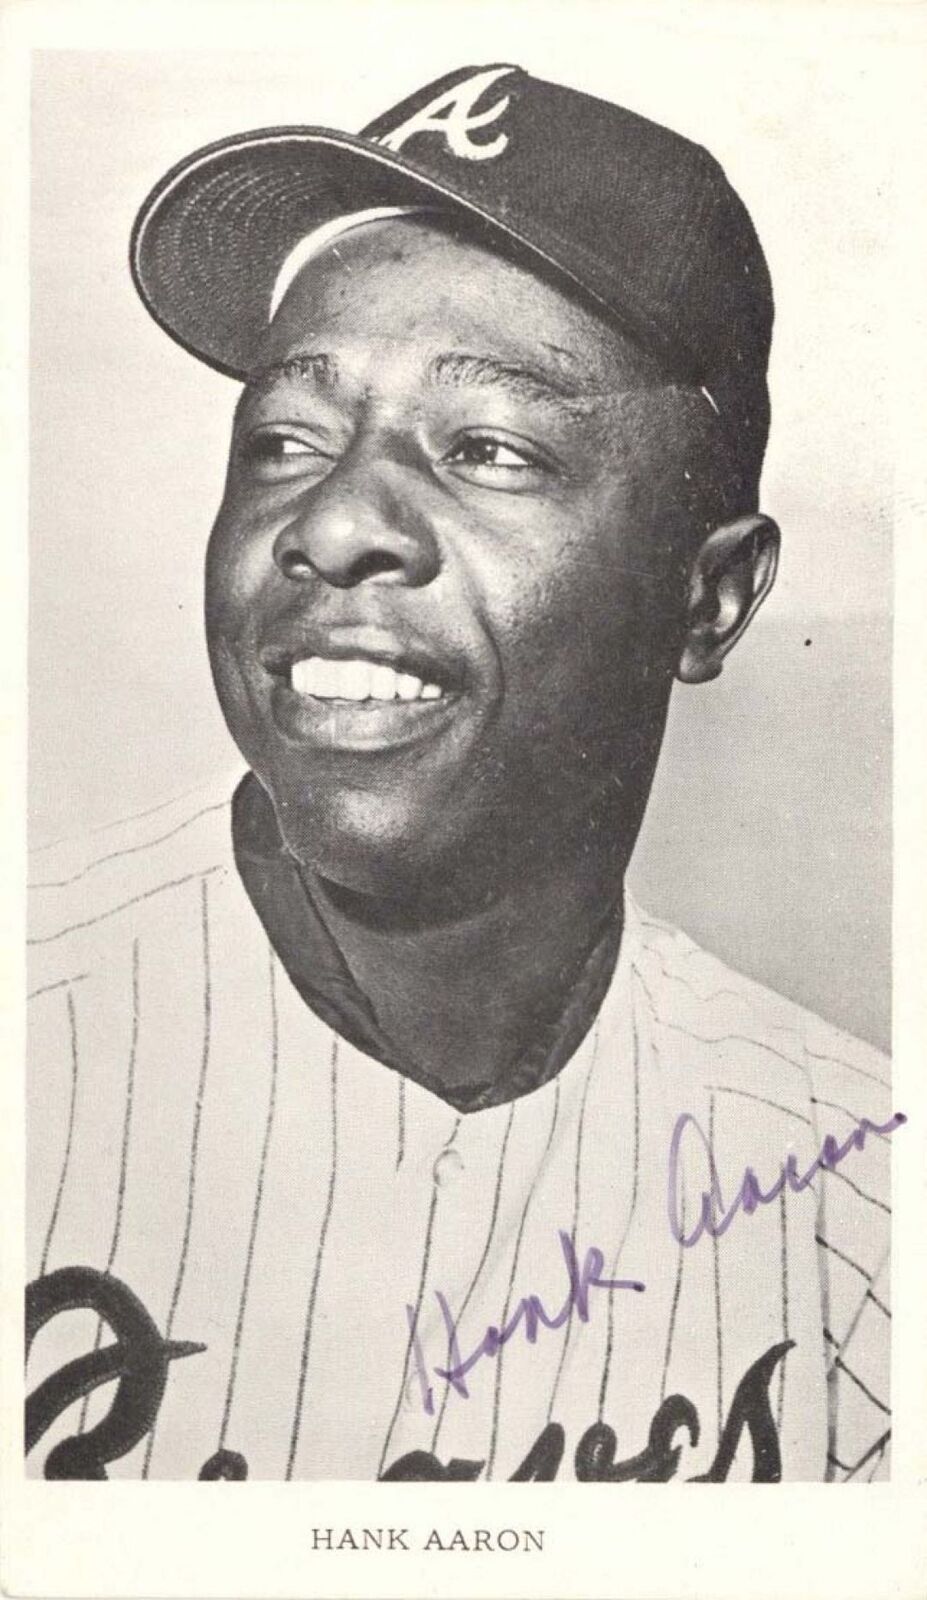 Hank Aaron Signed Photo - Autograph - Baseball Hall of Famer - Autographs of Fam